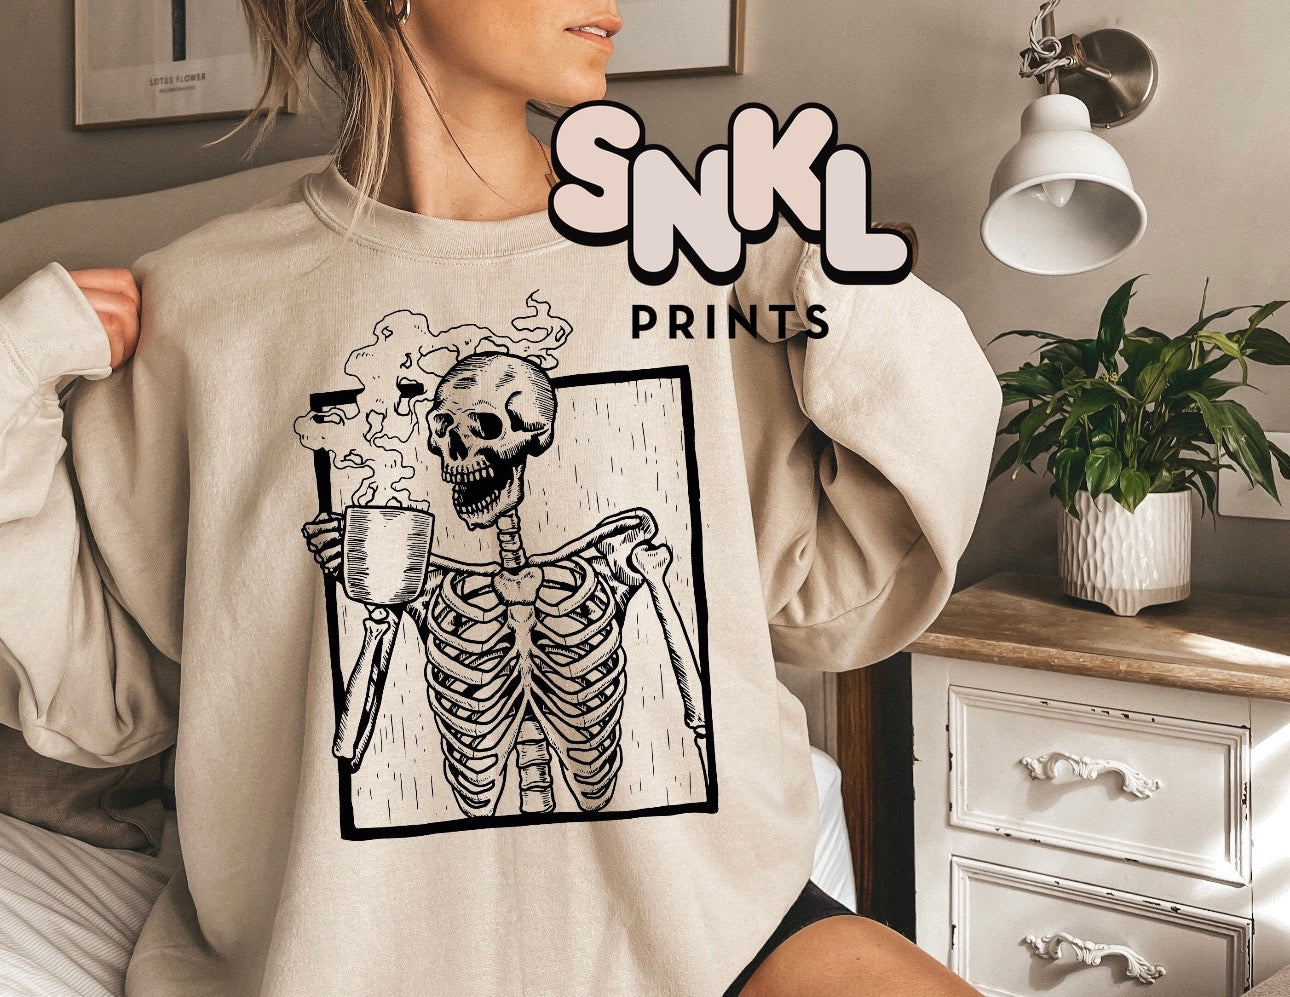 Skeleton Coffee Sweatshirt - SNKL Prints